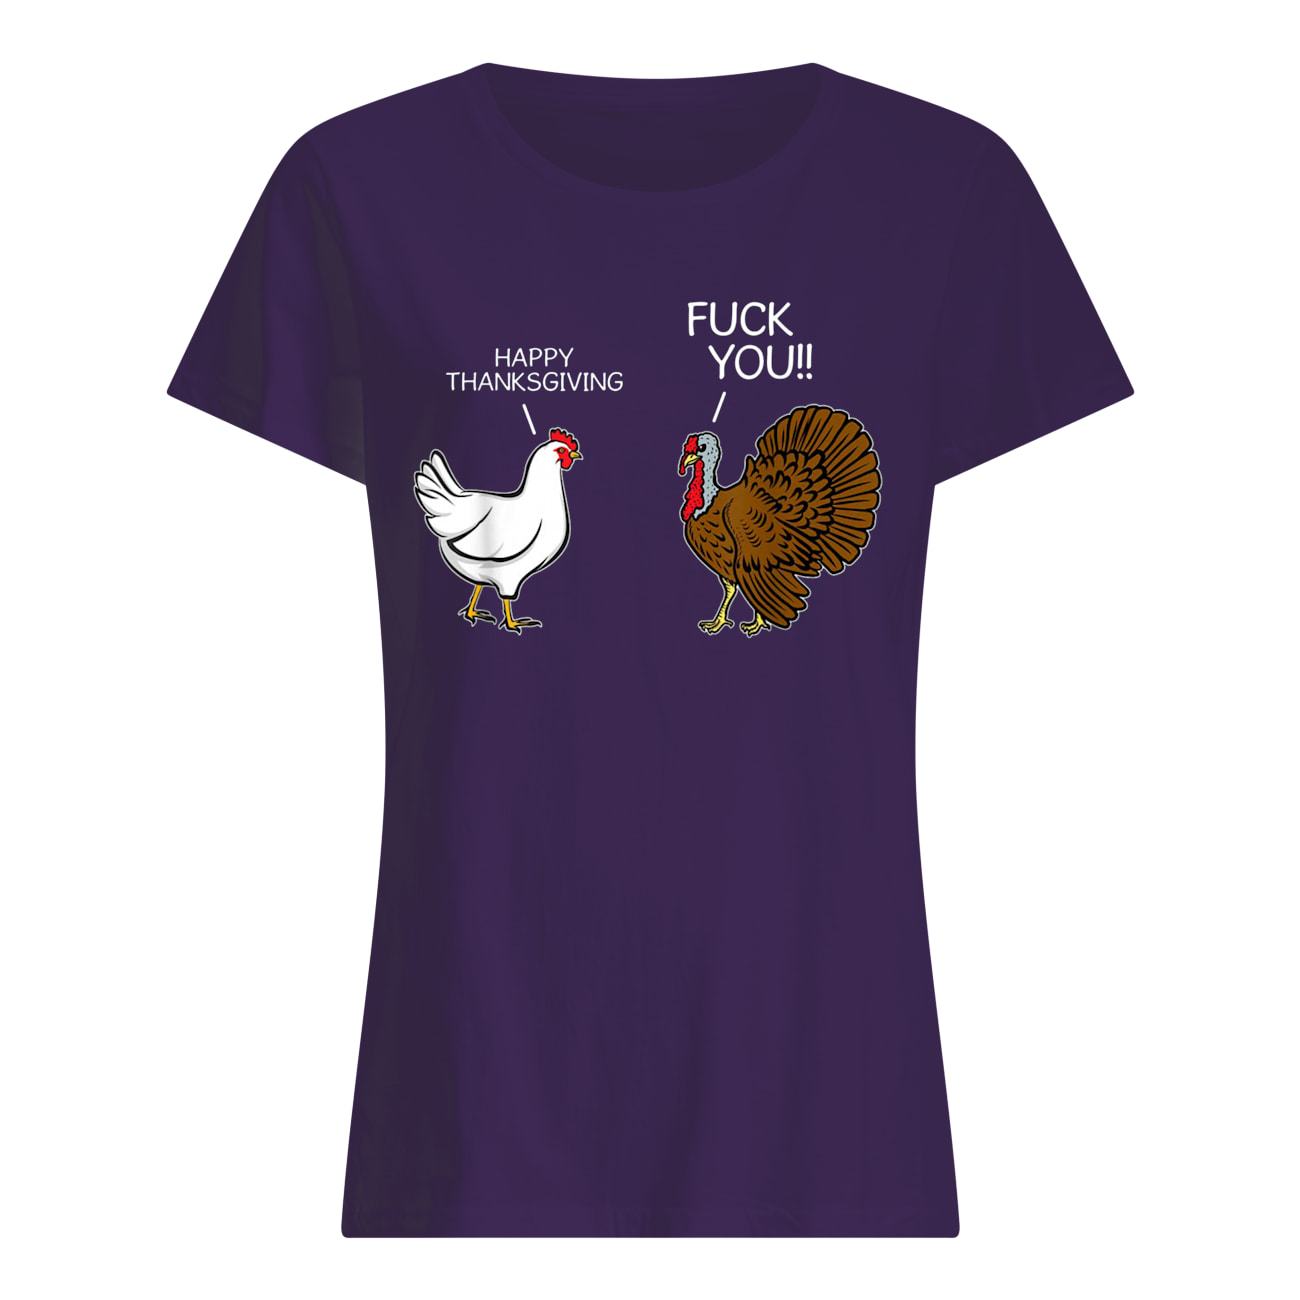 Fuck you chicken turkey hates happy thanksgiving womens shirt